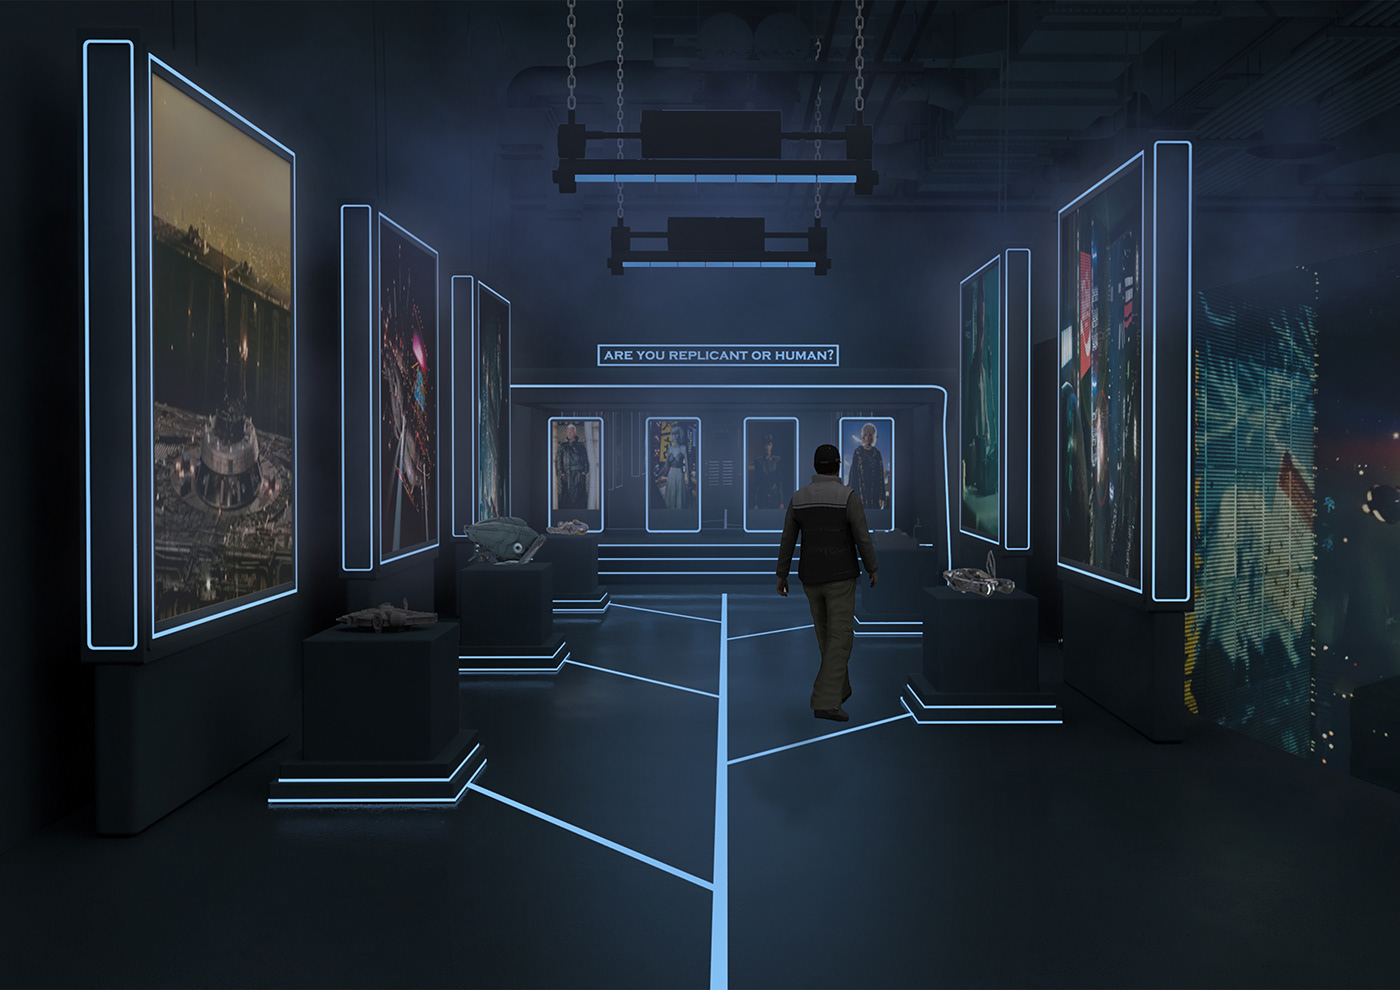 blade runner Cinema experience design film museum blade runner 2049 Cyberpunk future movie sci-fi